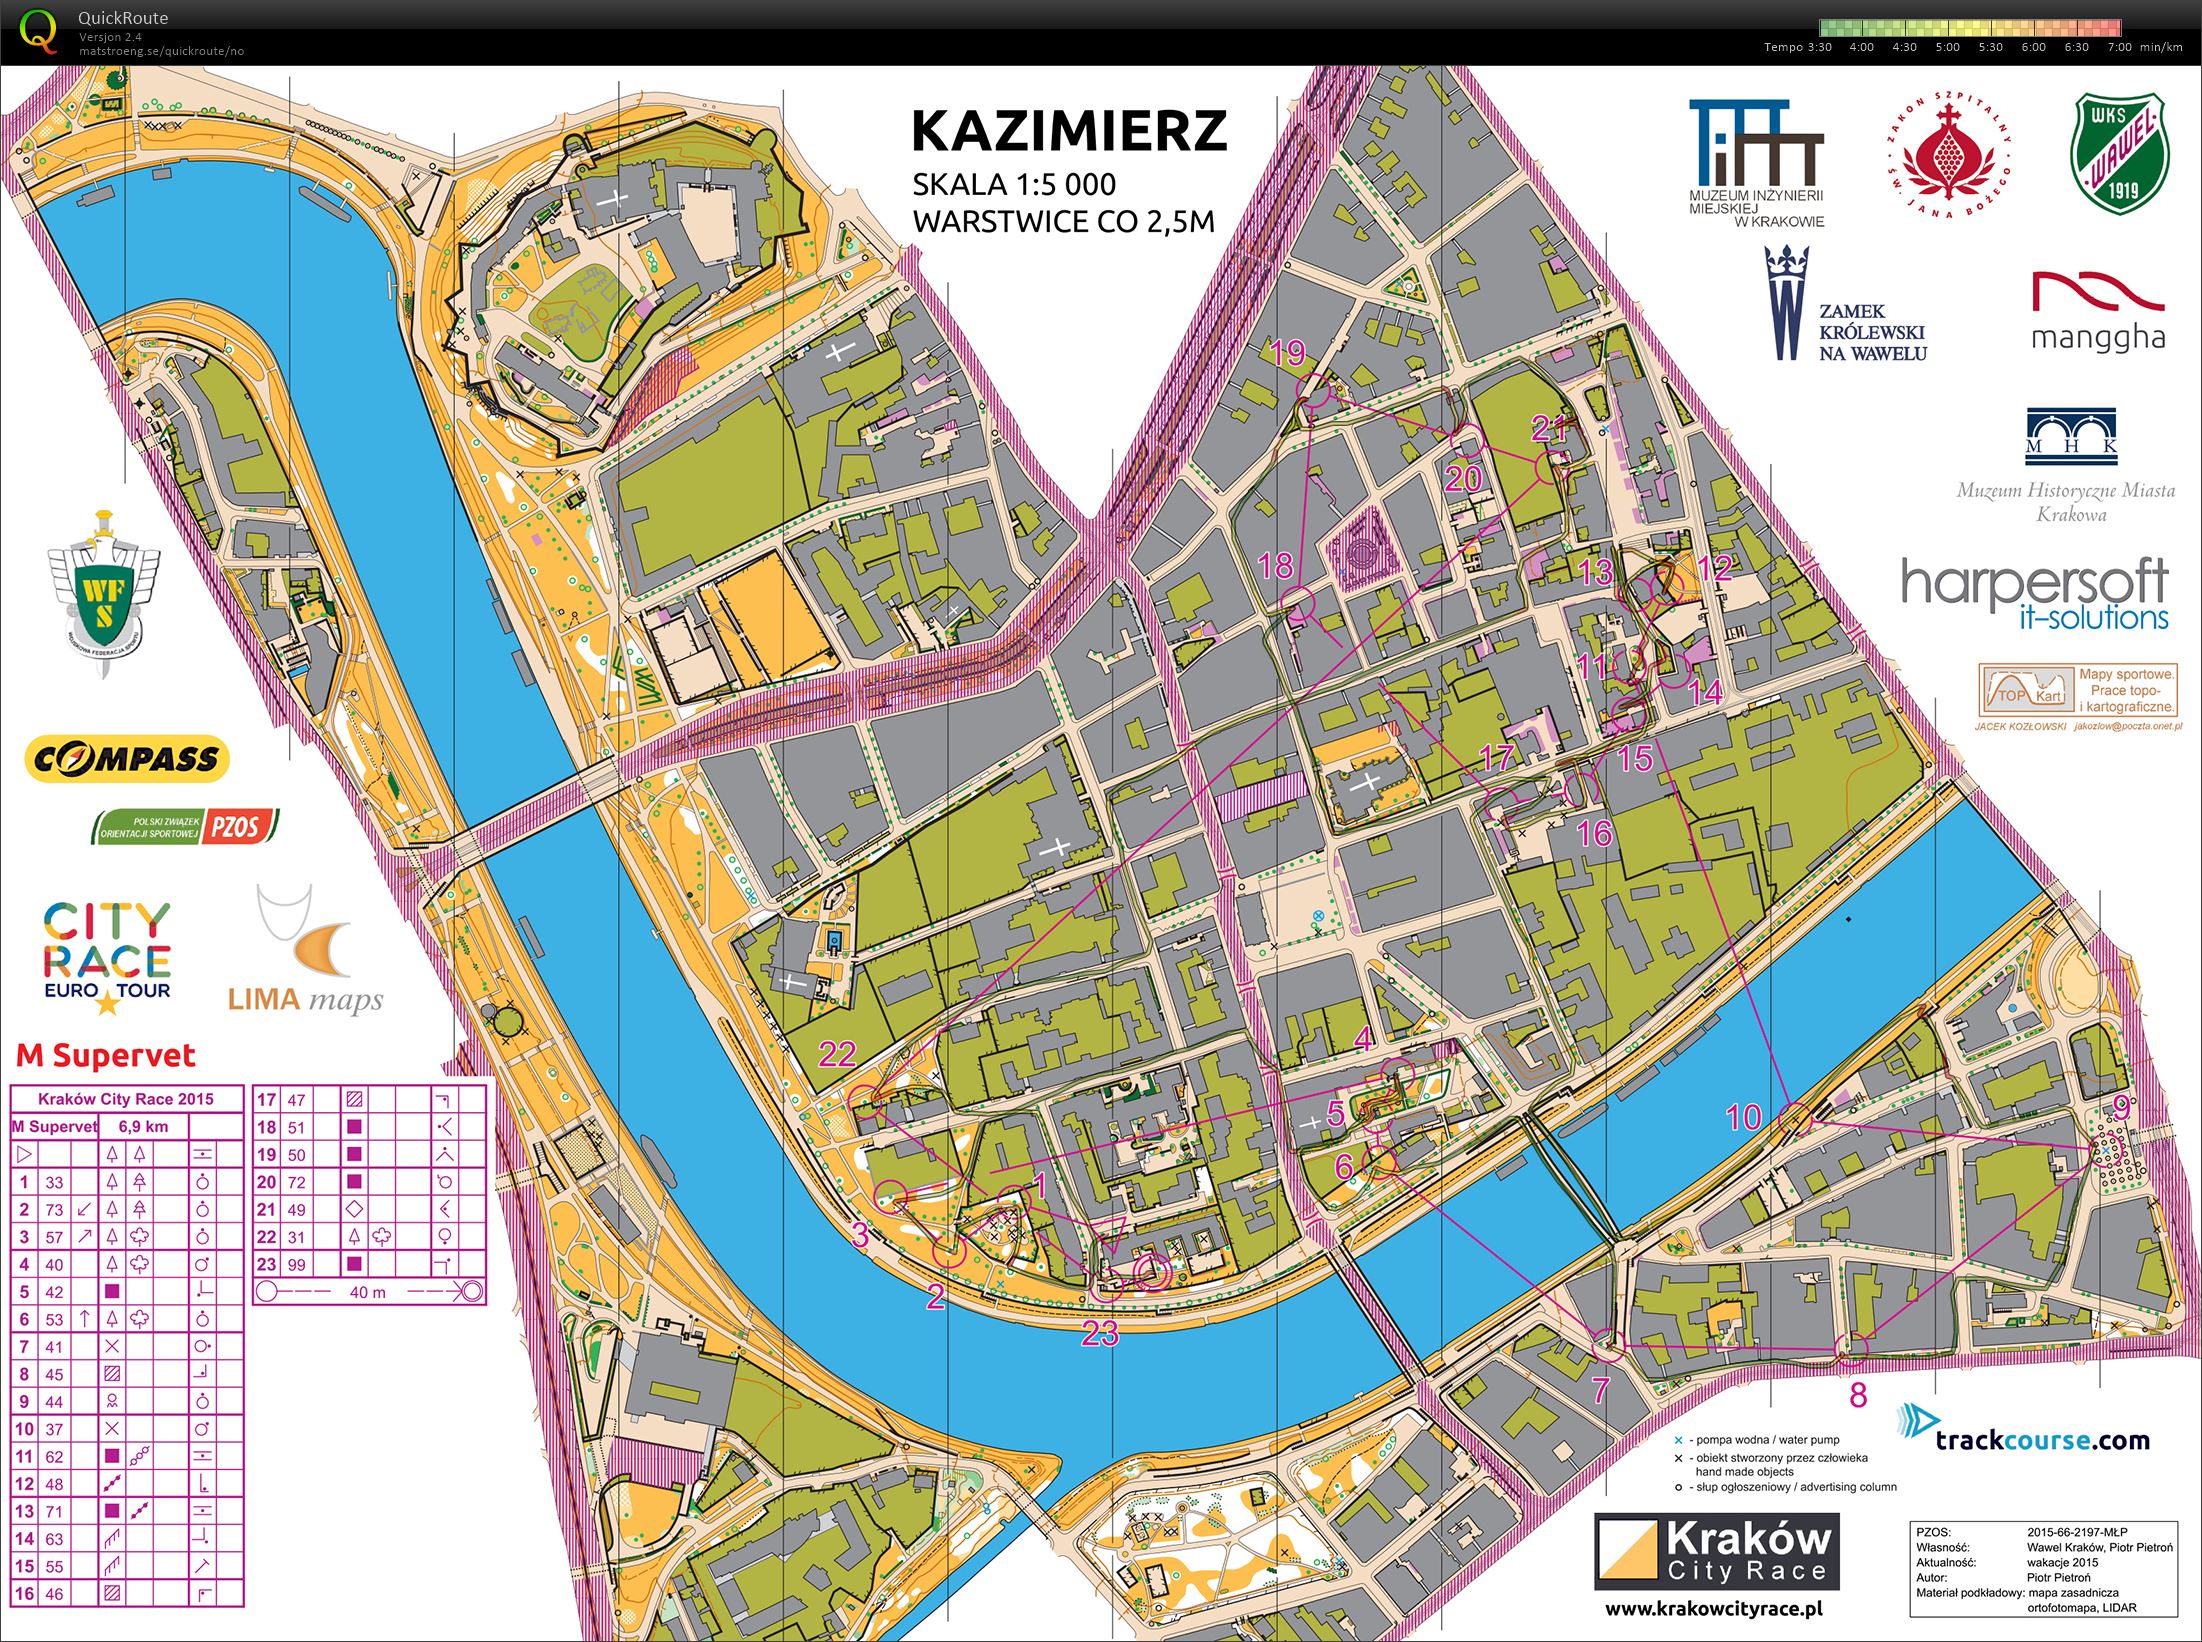 Krakow city race (11/10/2015)